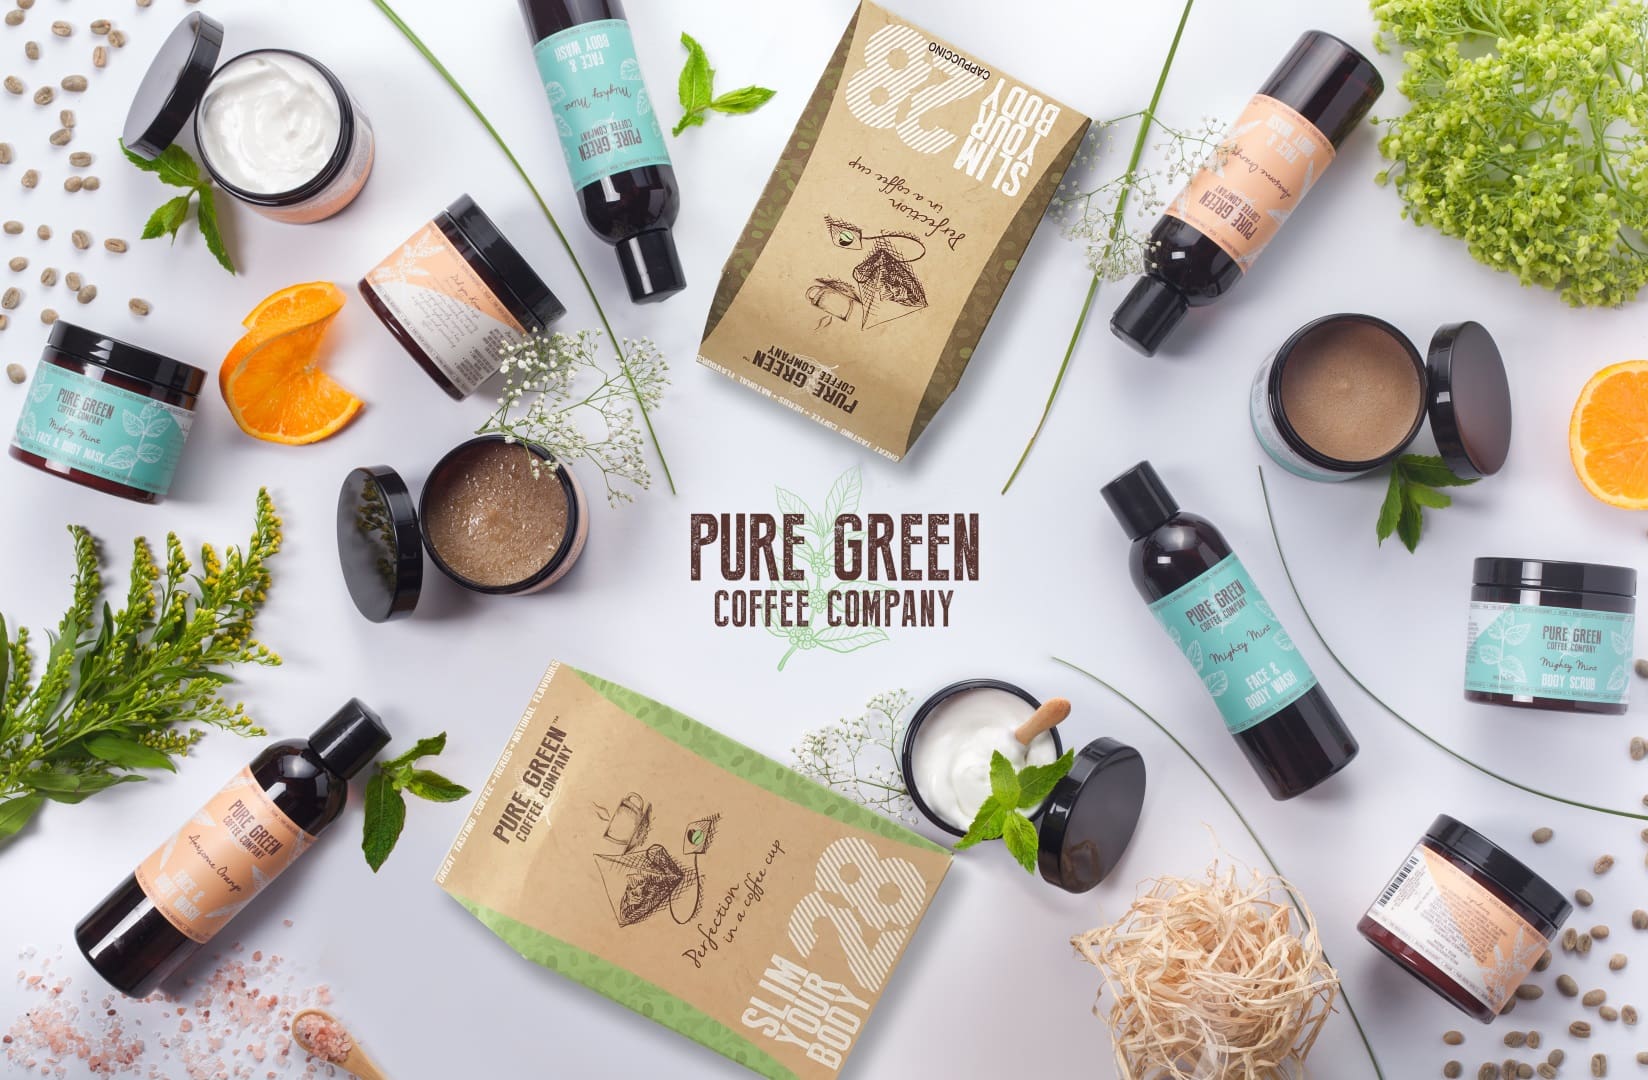 Pure Green Coffee Company